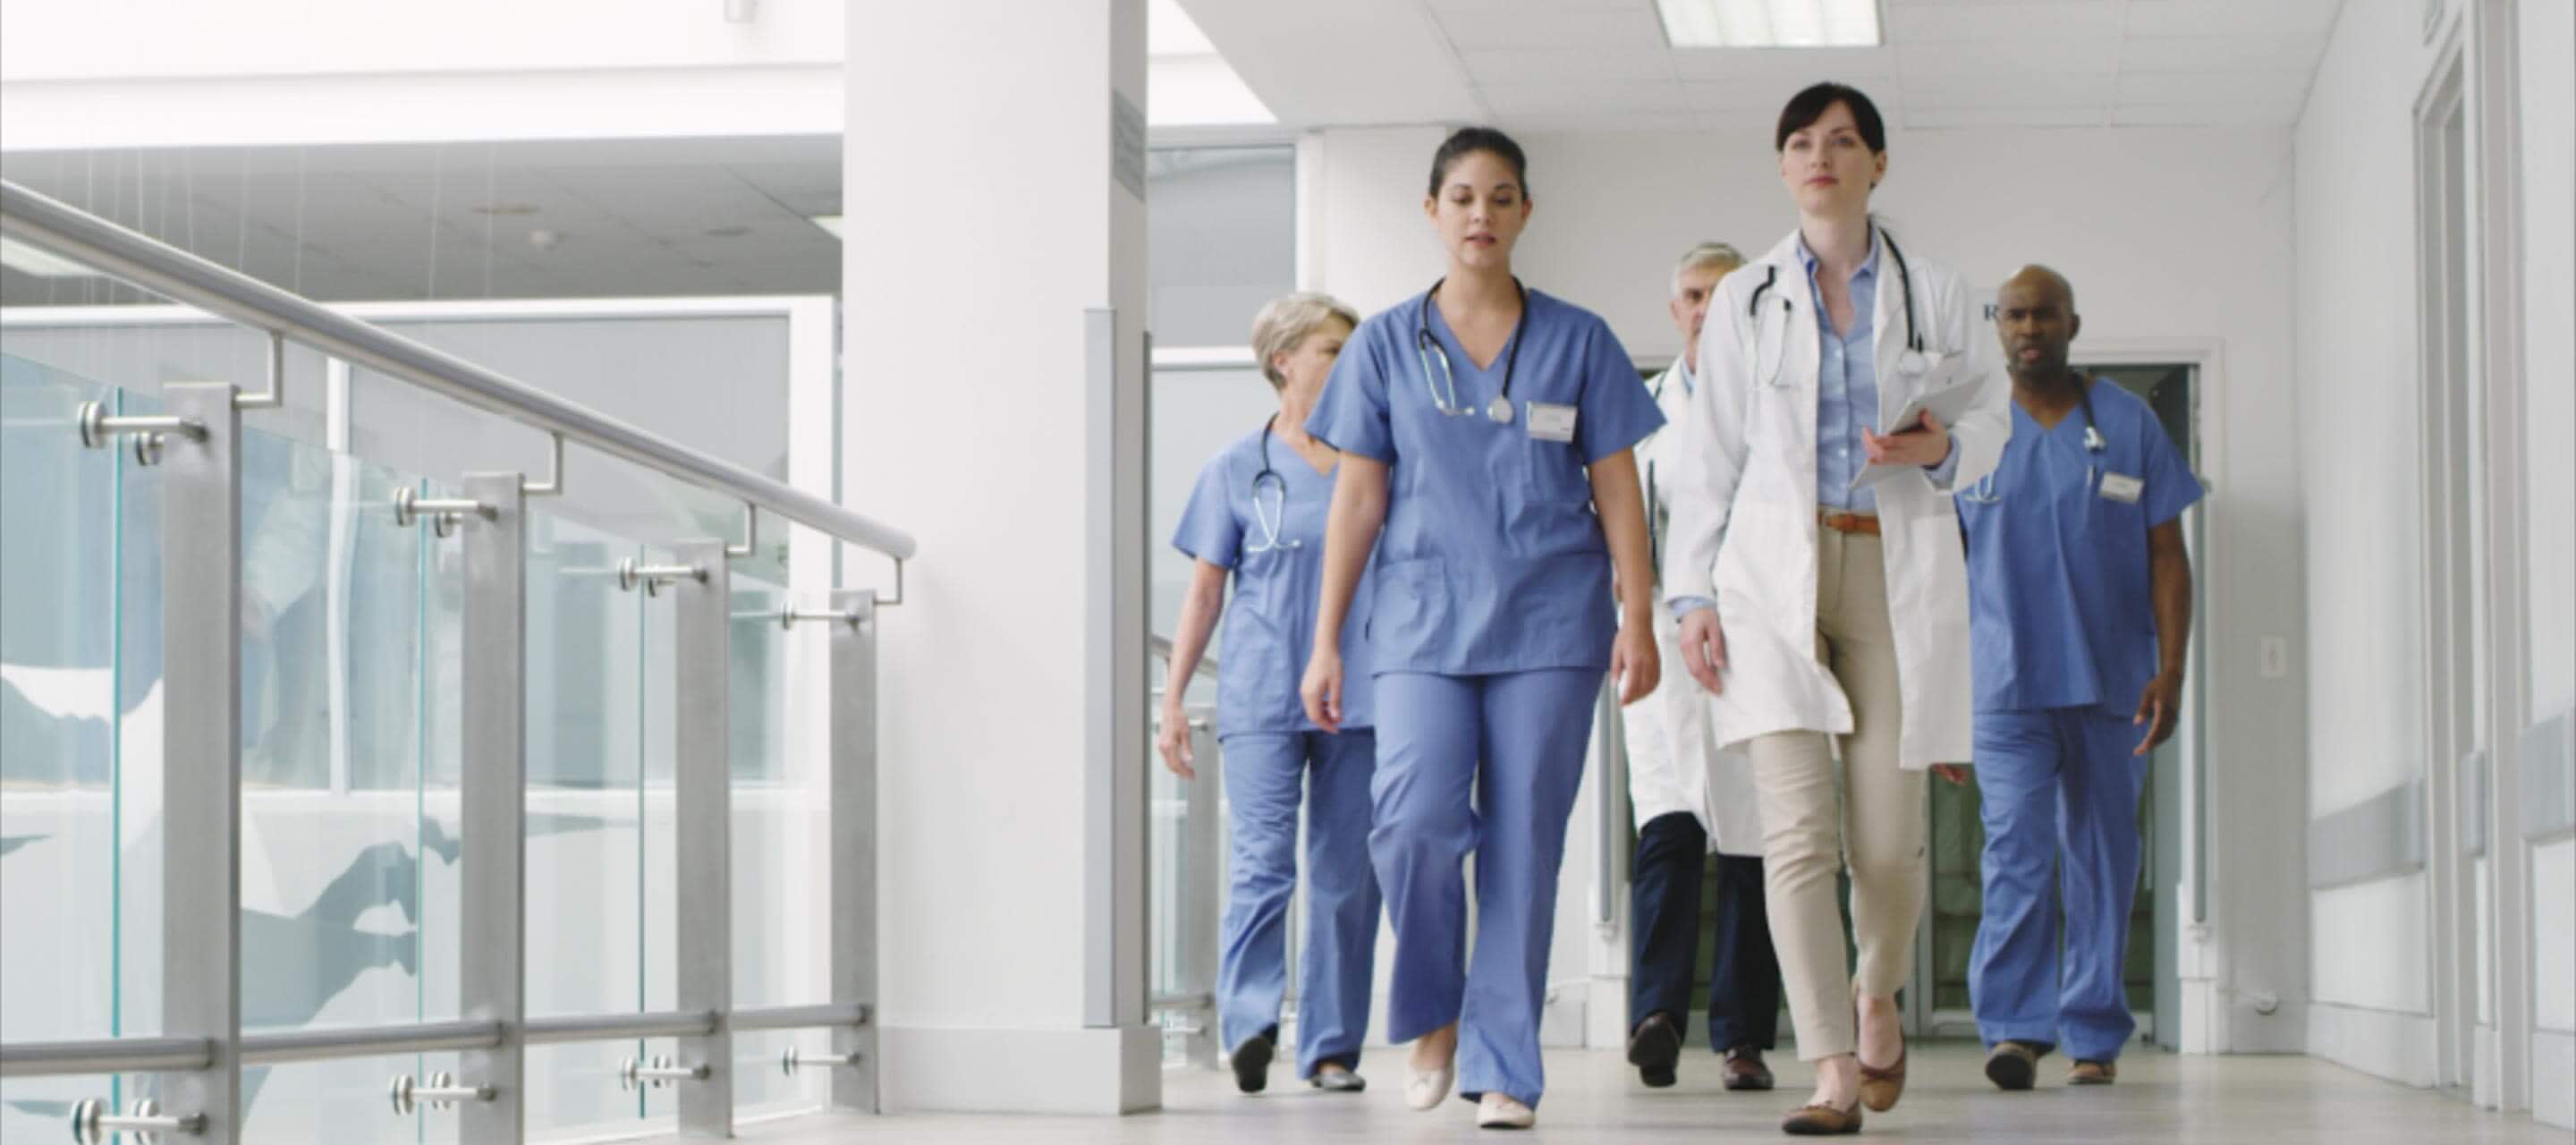 nurses and doctors walking through hospital halls